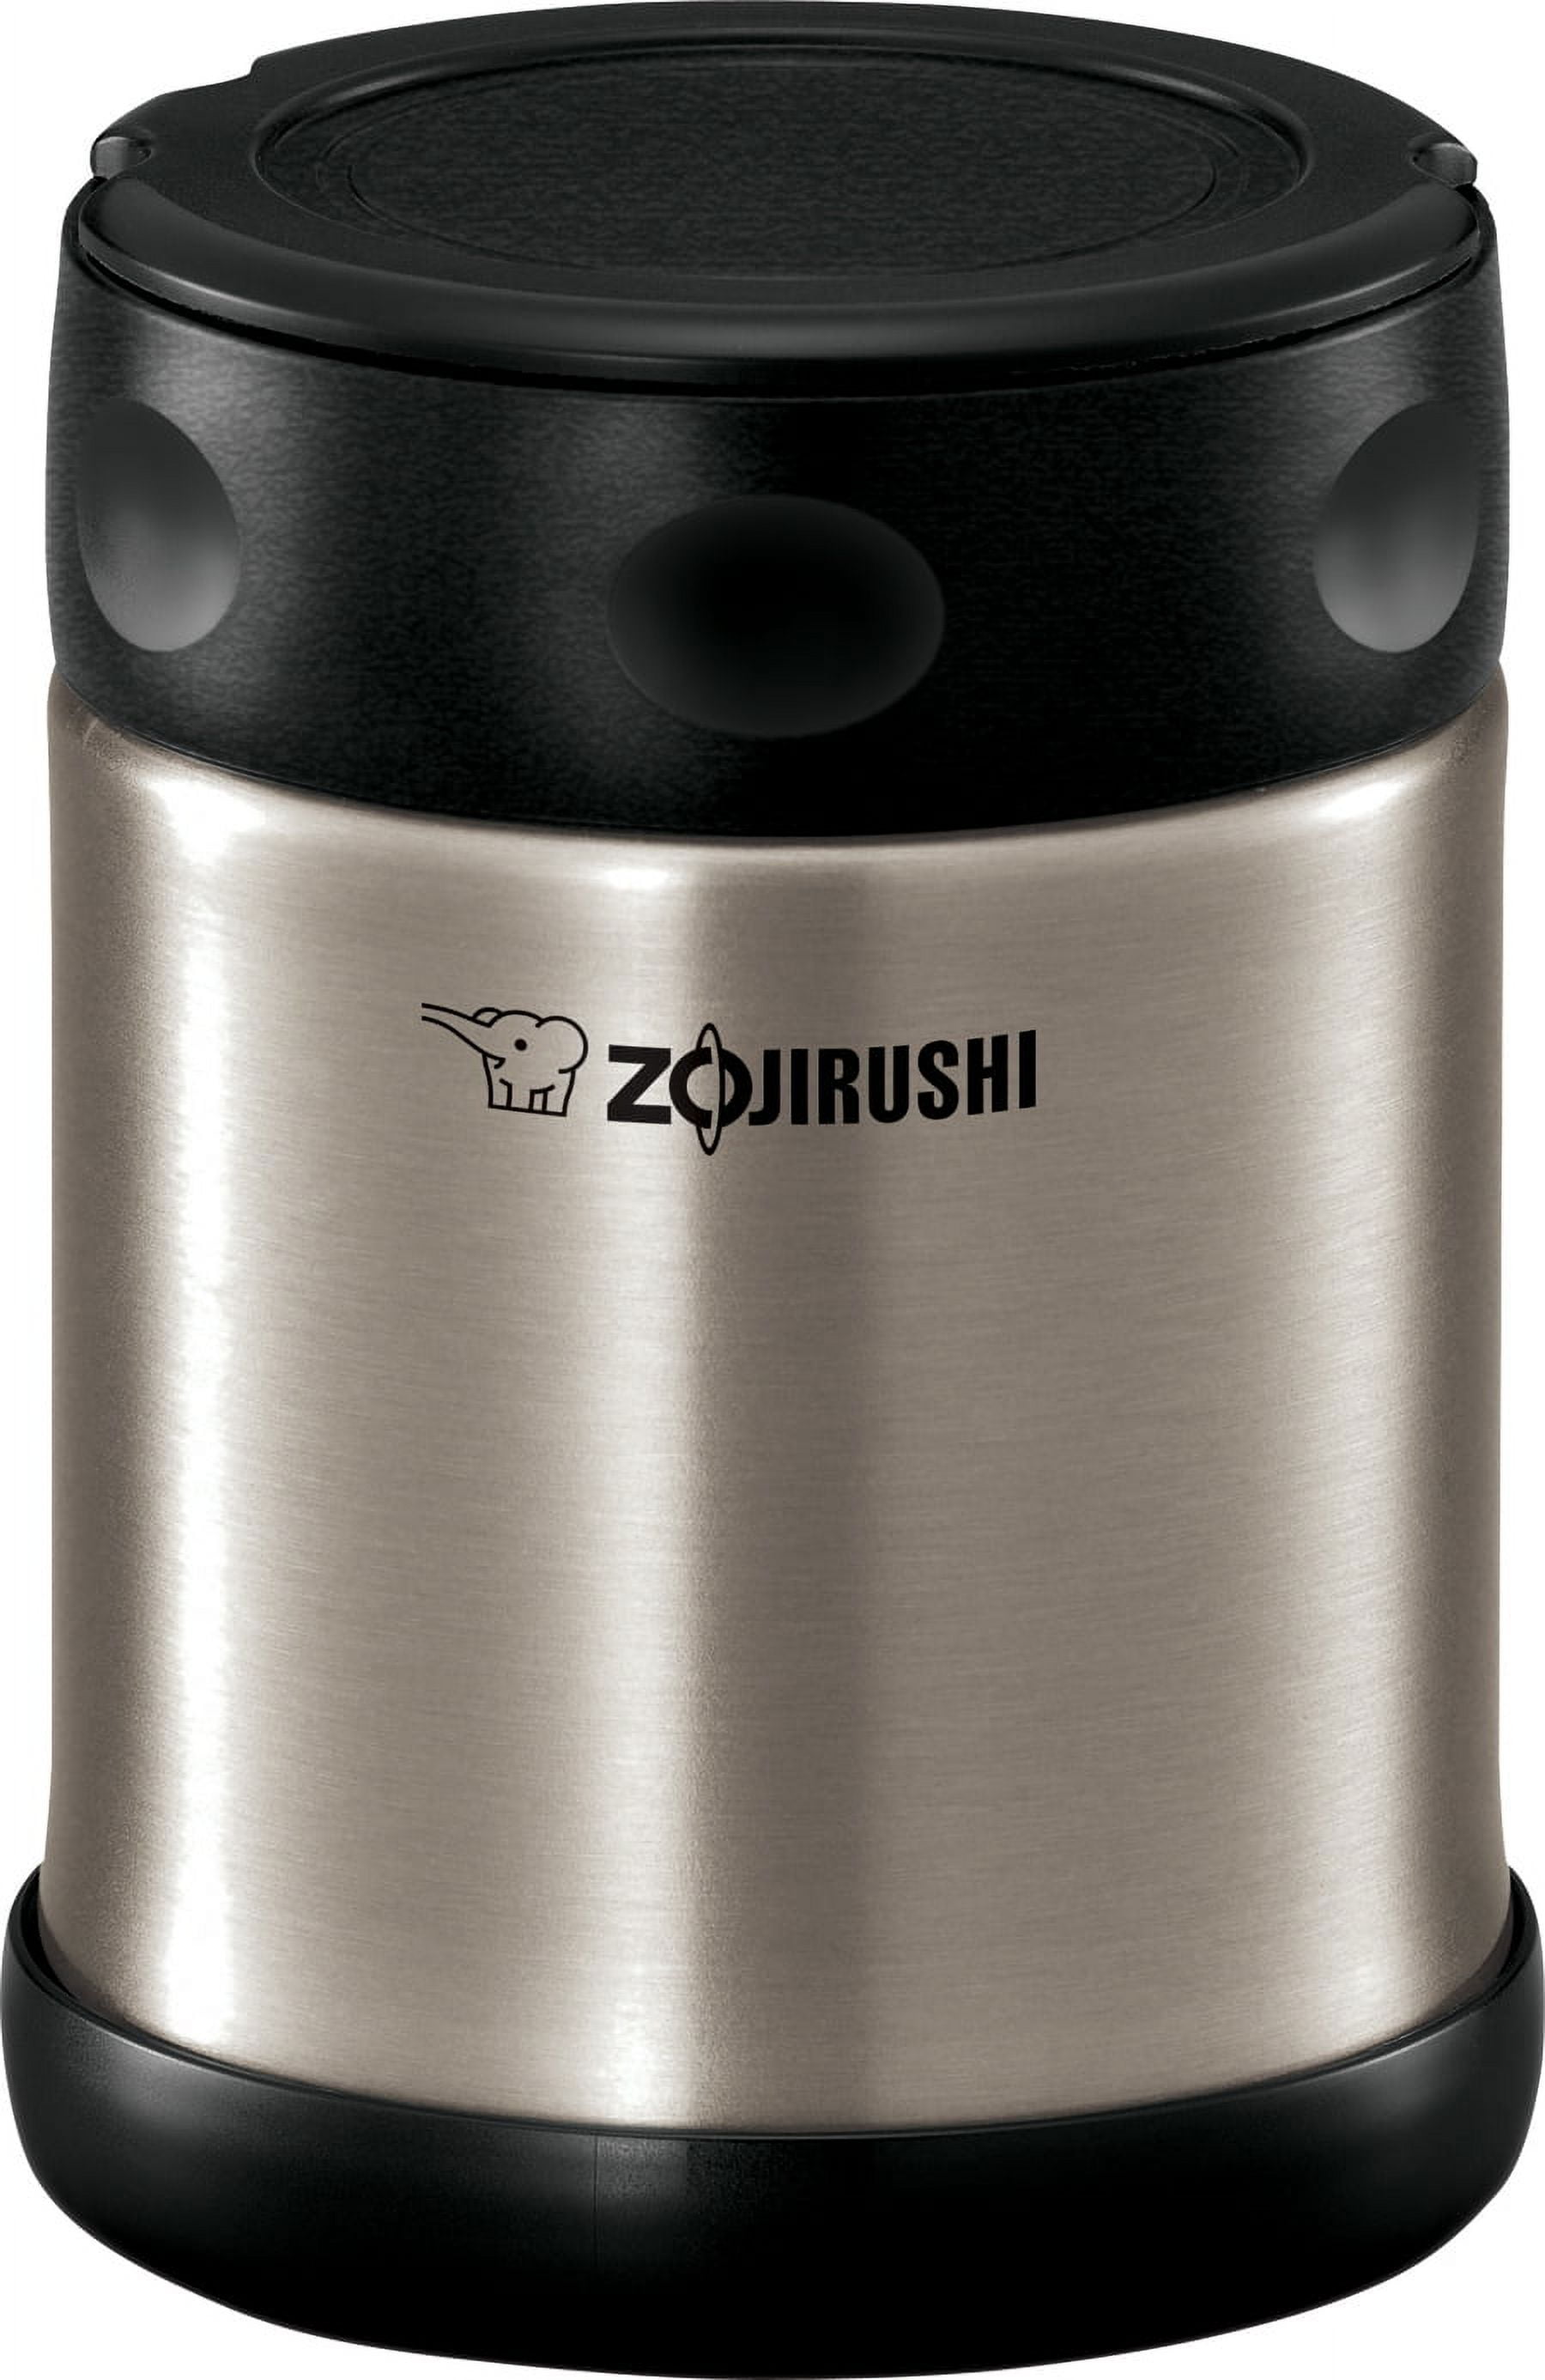 Zojirushi Steel Food Jar, 16.9-Ounce, Black/Stainless